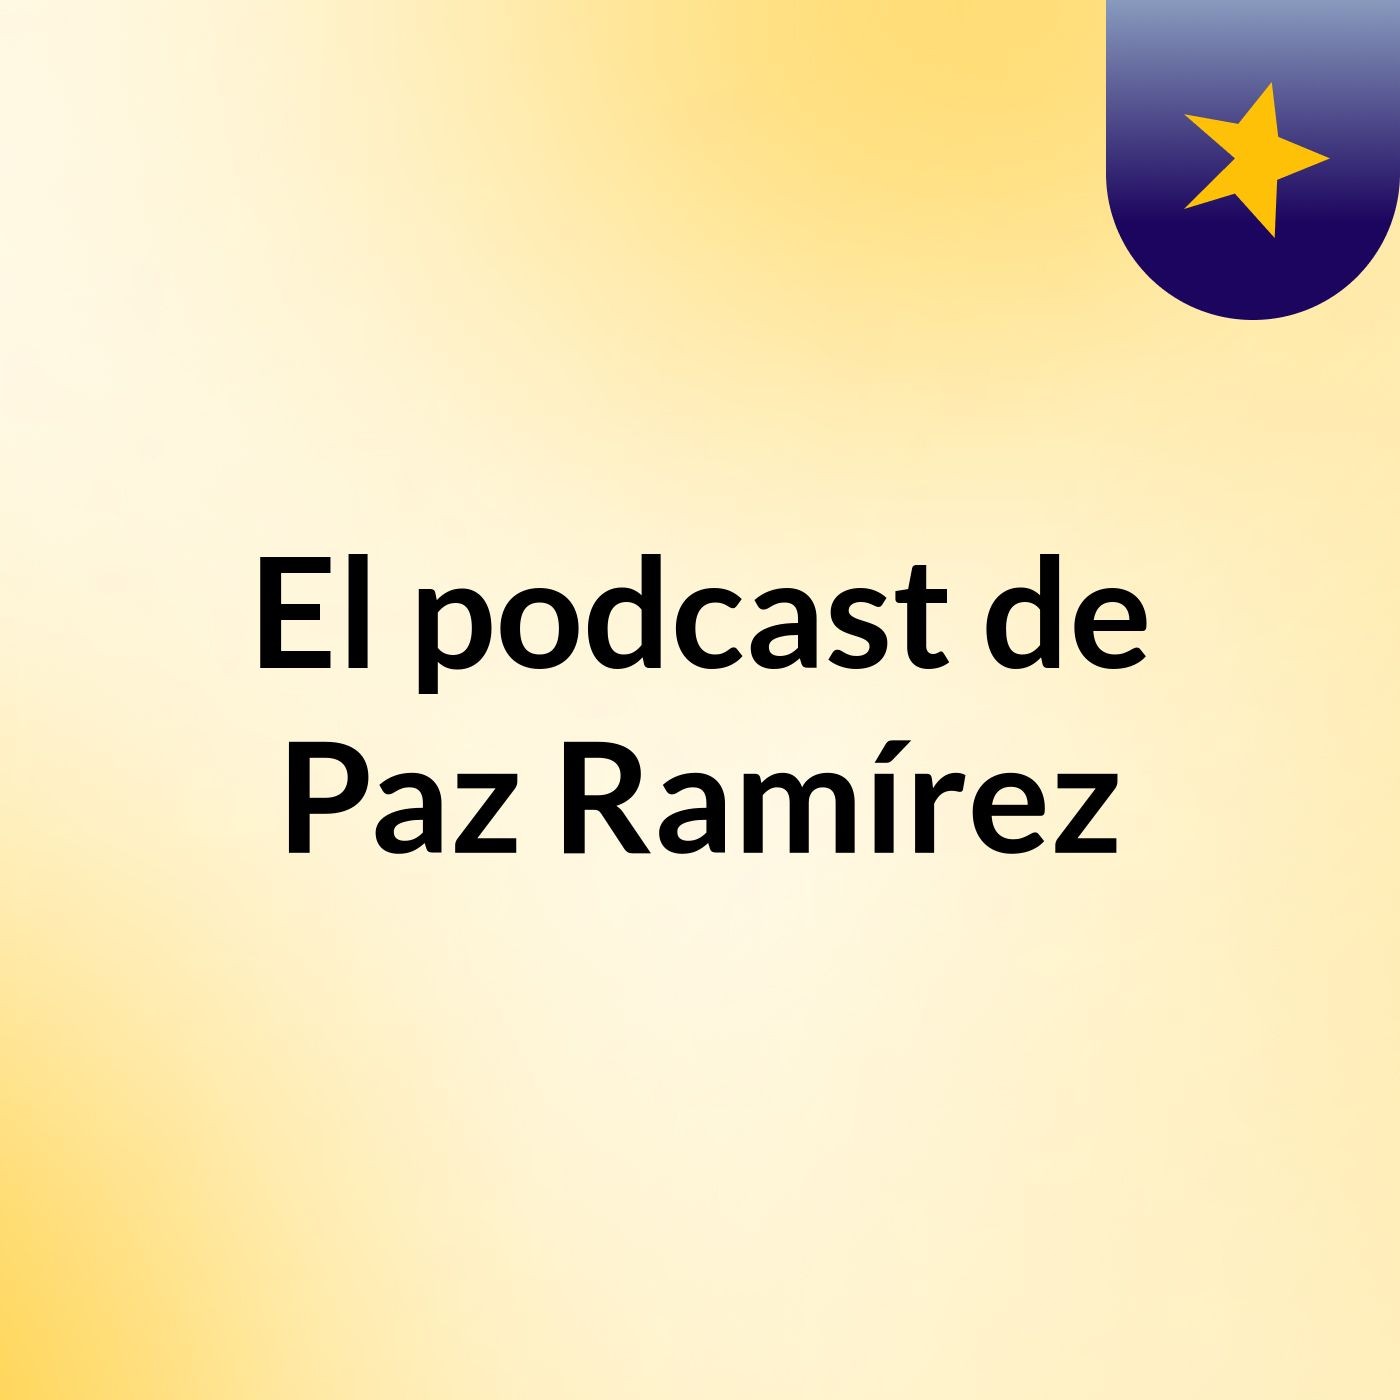 El podcast de Paz Ramírez